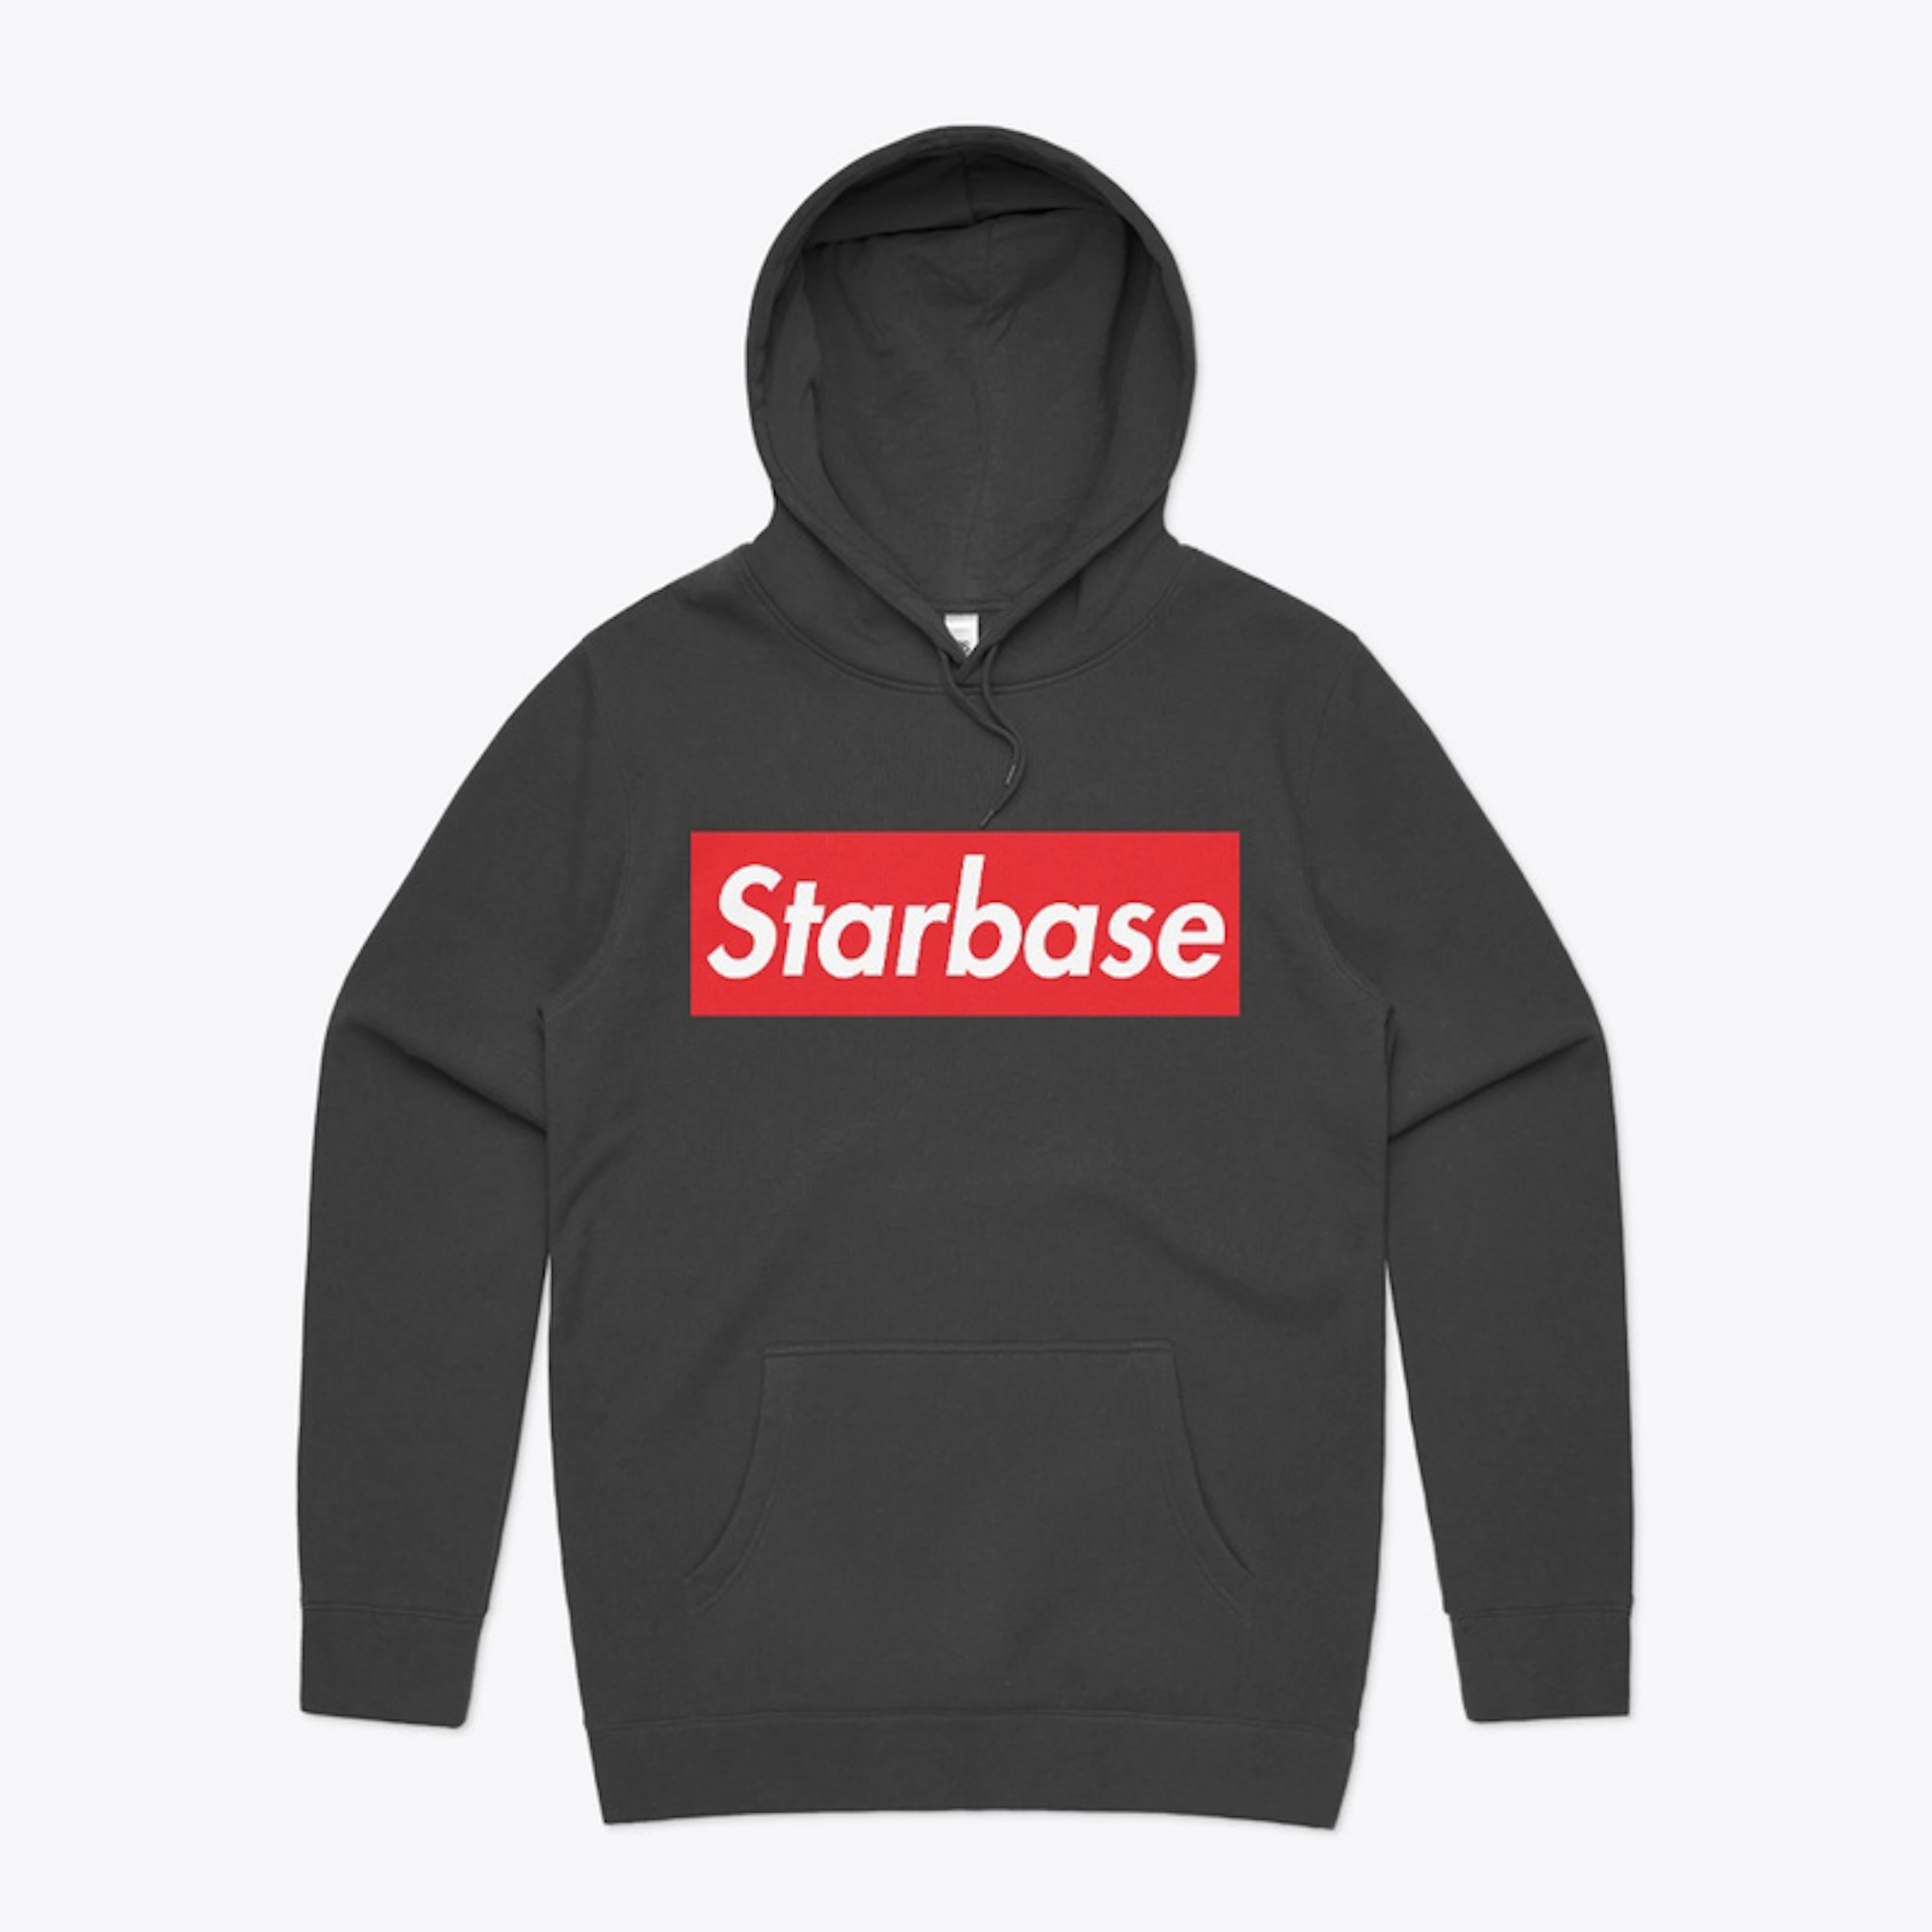 Starbase T